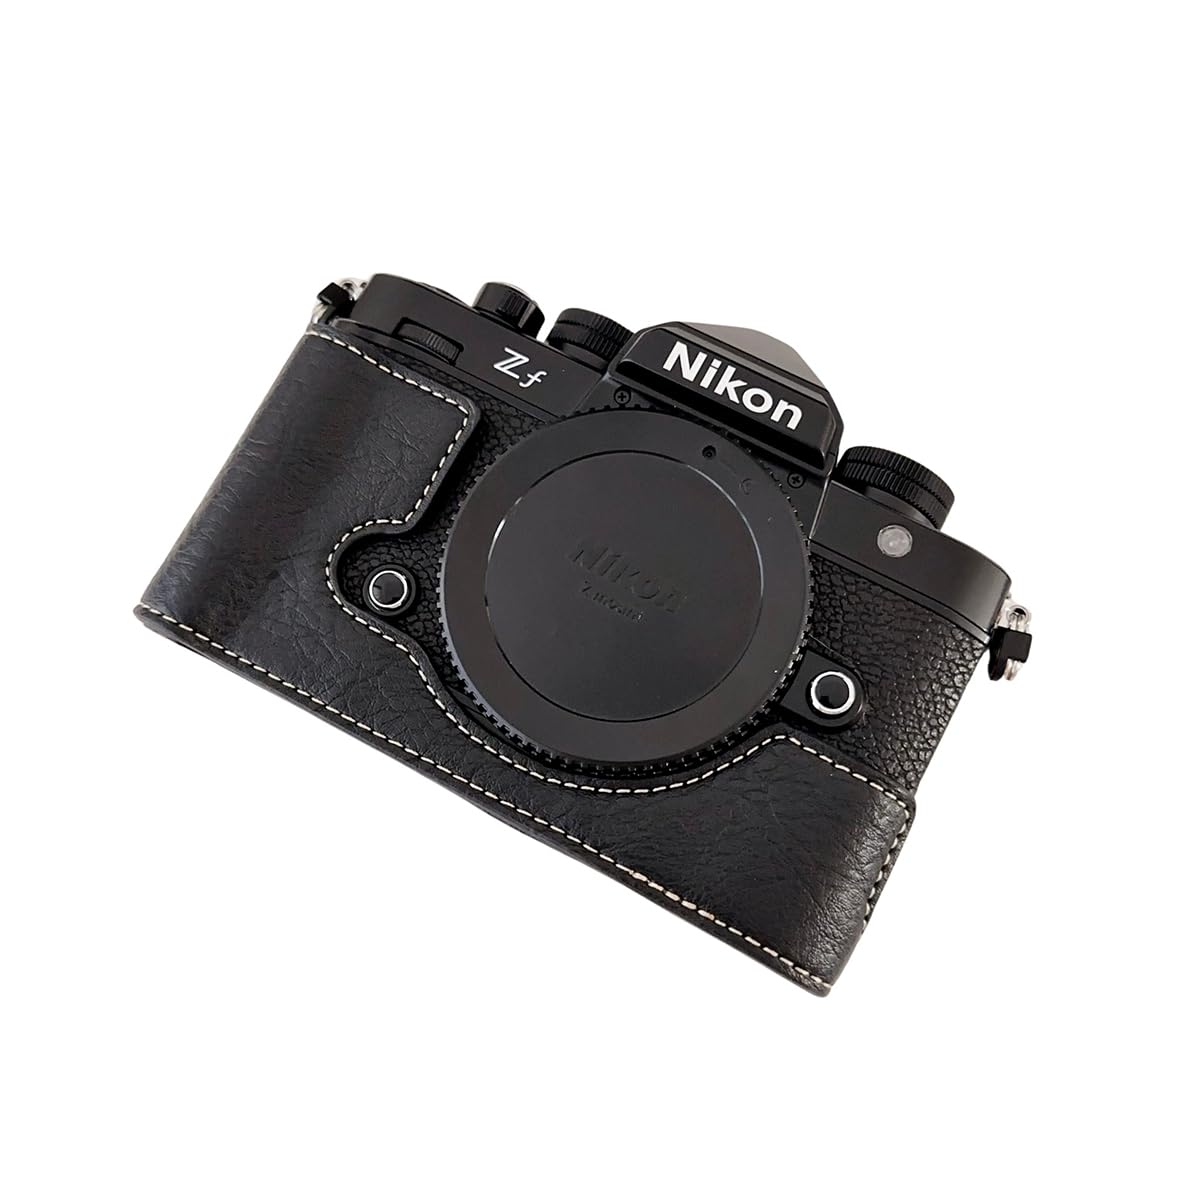 Koowl 対応 Nikon ニコン Zf Z f カメラ バッグ カメラ ケース Koowl手作りトップクラスのPUレザーカメラハーフケース 一眼カメラケース 防水 防振 携帯型 三脚設置でき (ブラック)